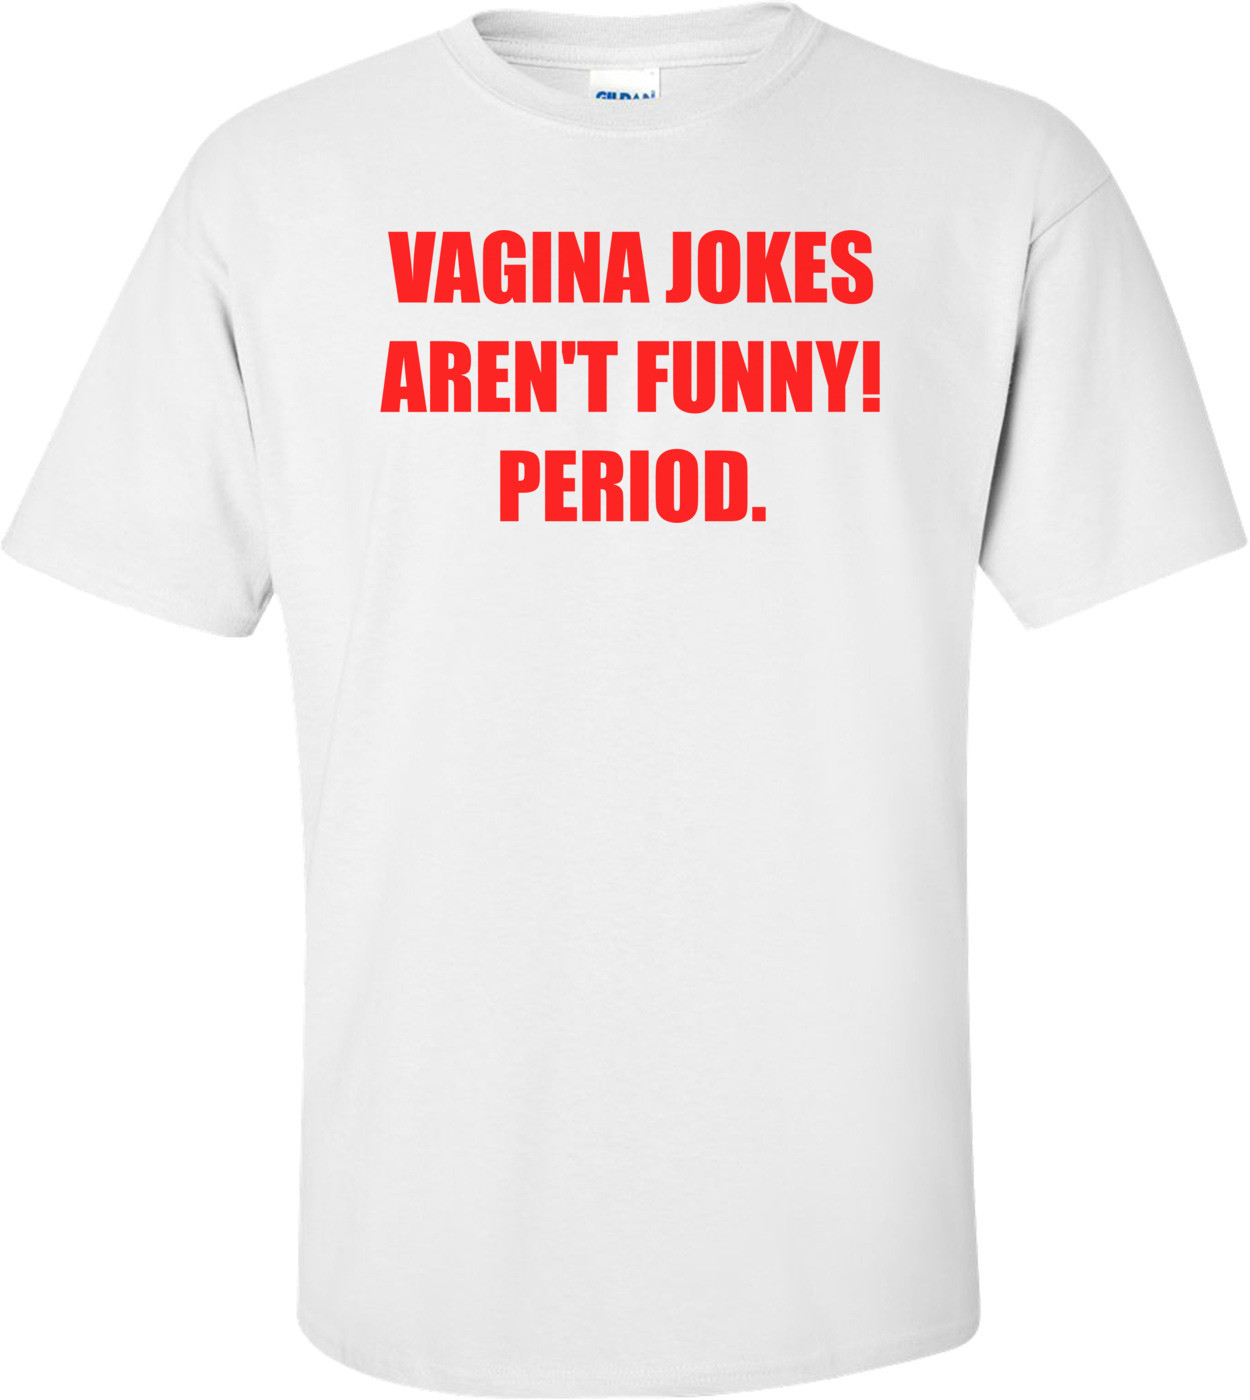 VAGINA JOKES AREN'T FUNNY! PERIOD. Shirt